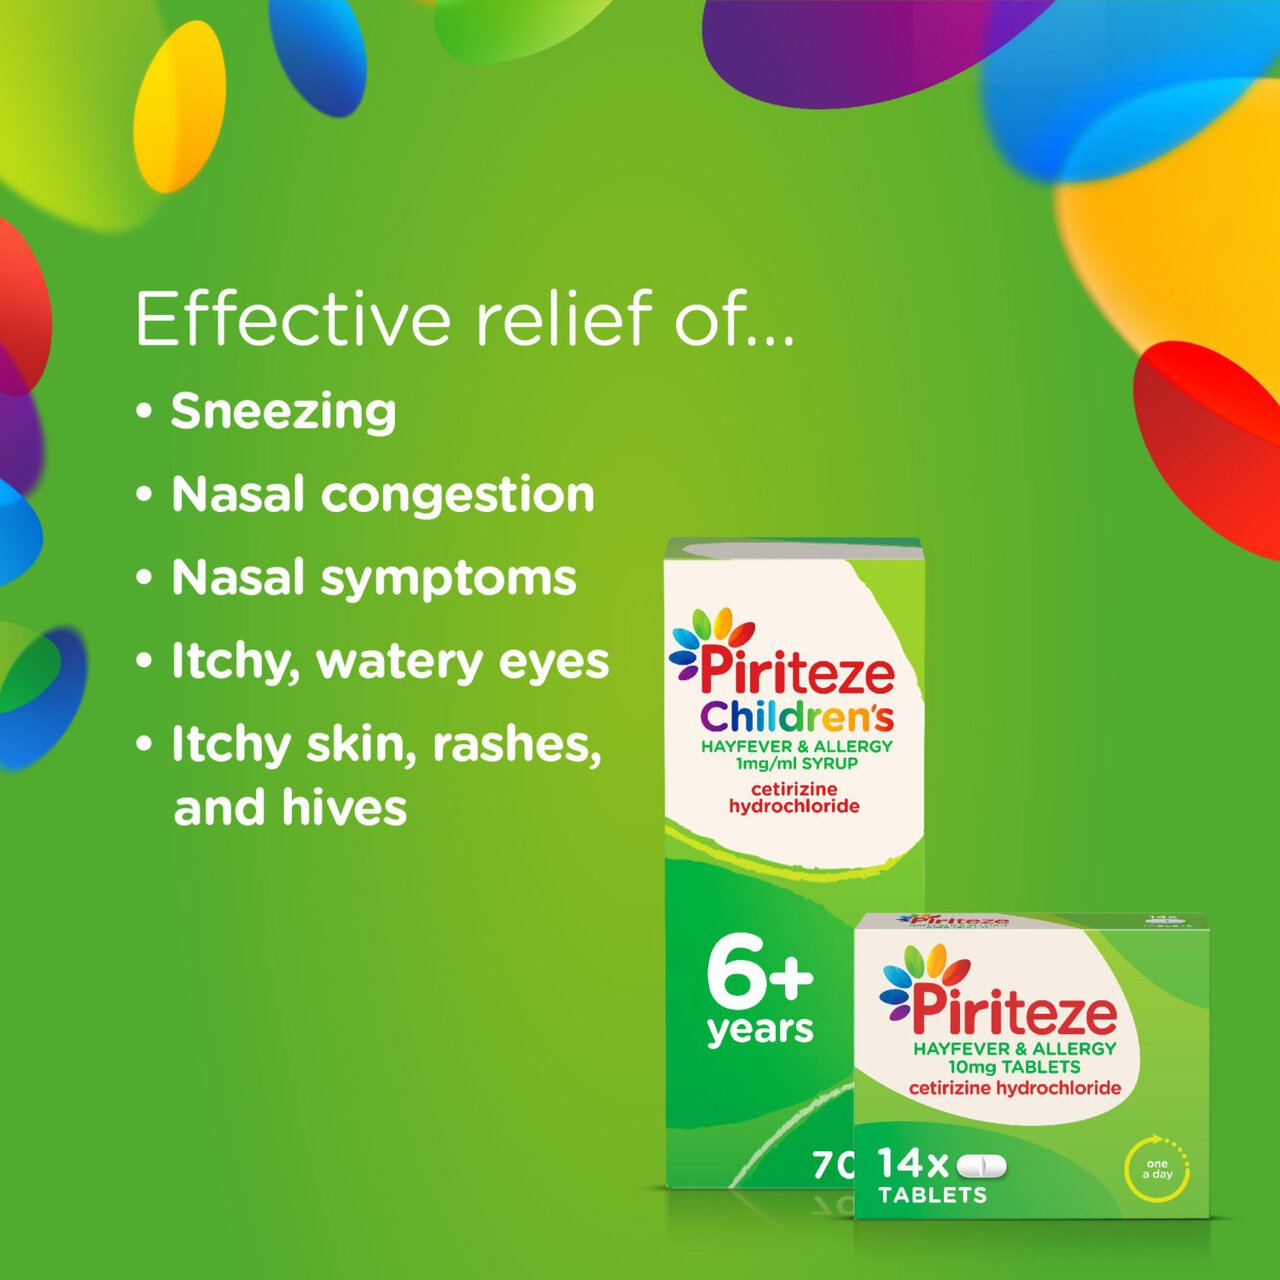 Piriteze Antihistamine Allergy Relief Tablets Cetrizine 14 per pack